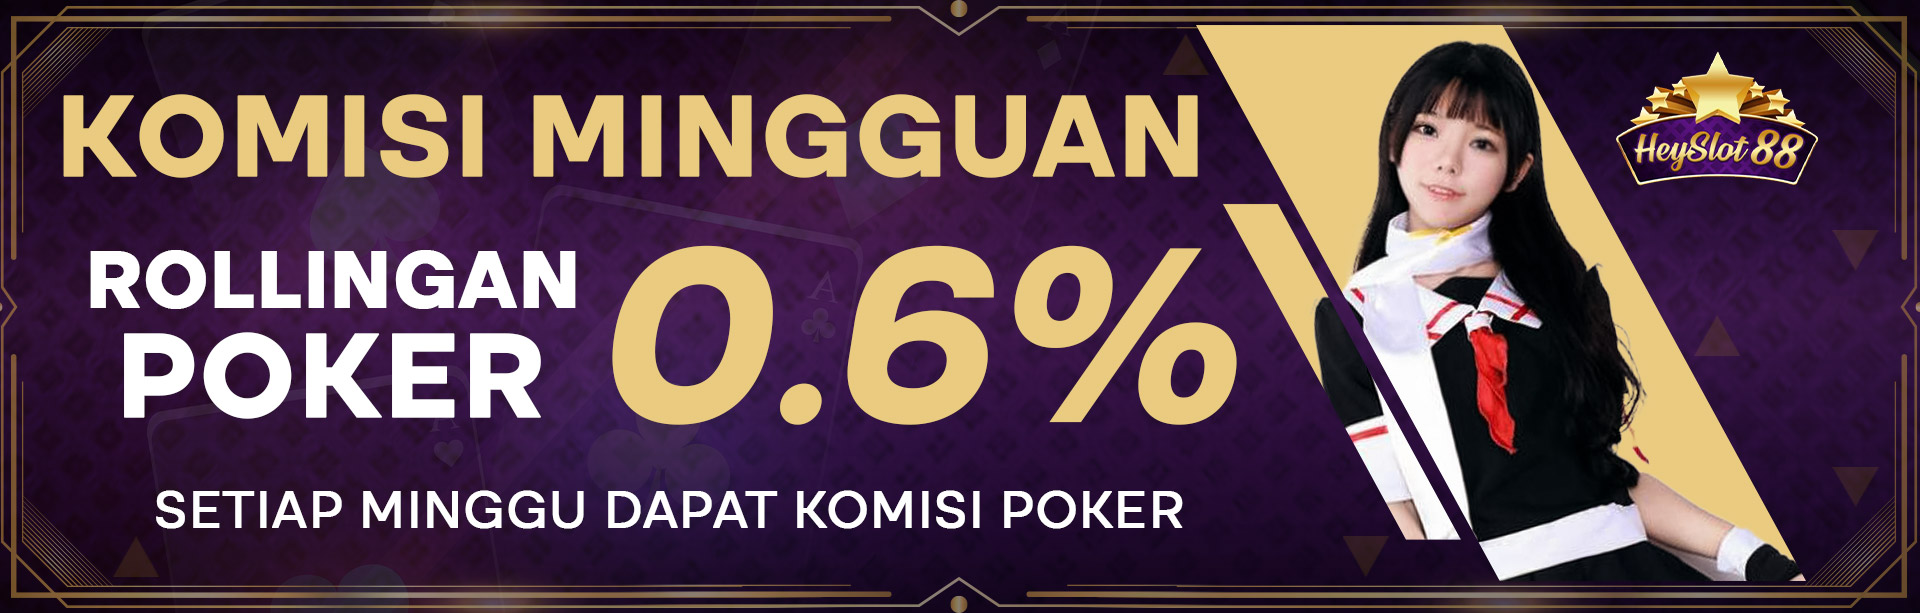 Bonus Komisi Mingguan Poker 0.6%